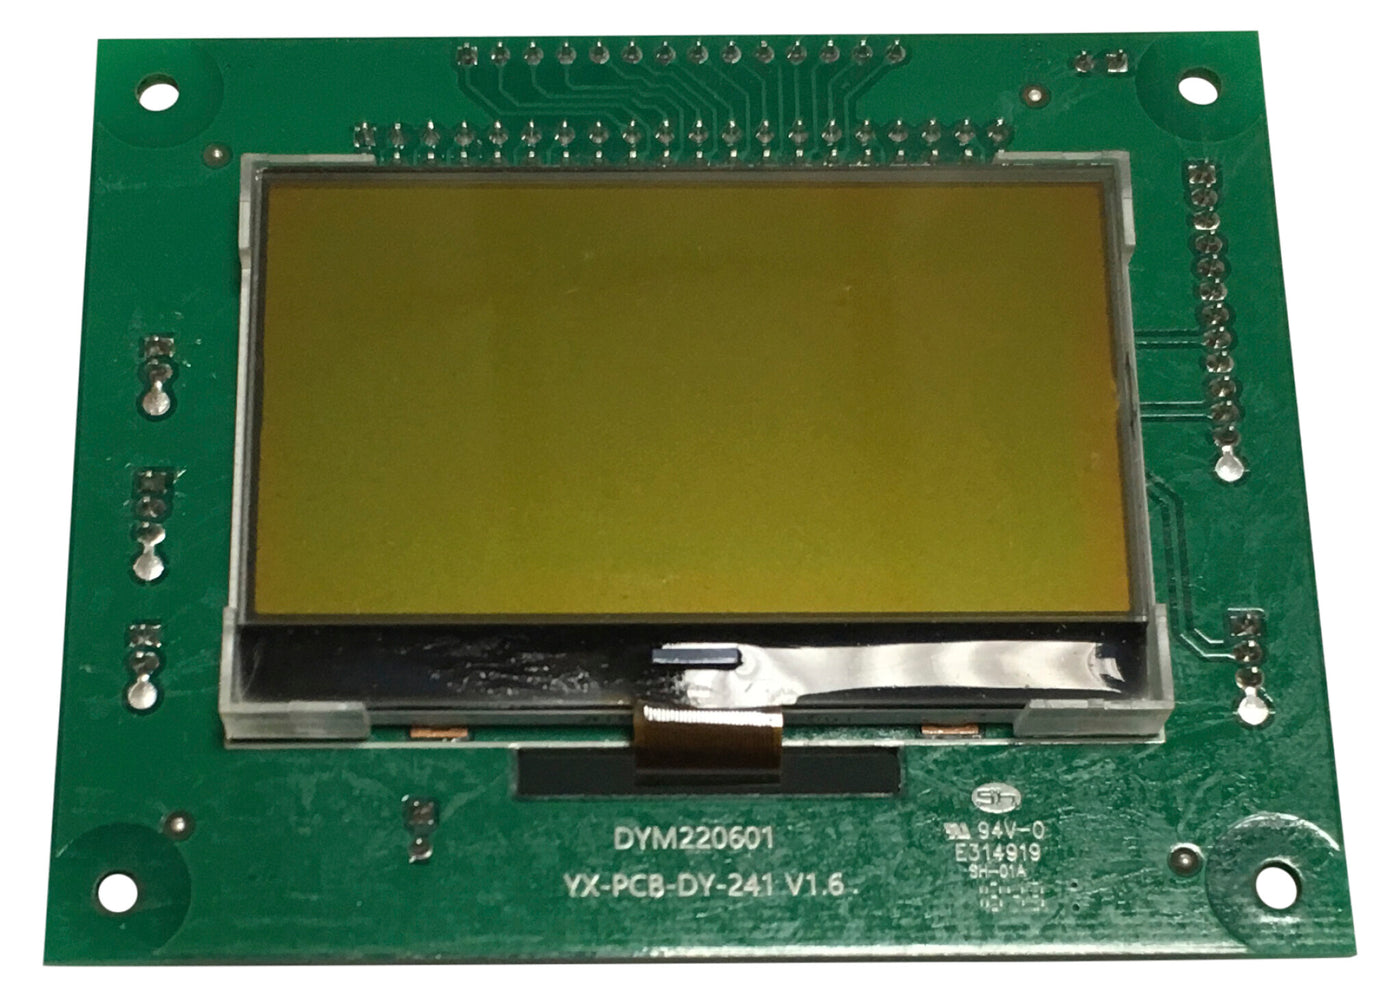 LCD DISPLAYER ASSY F/ROBOT